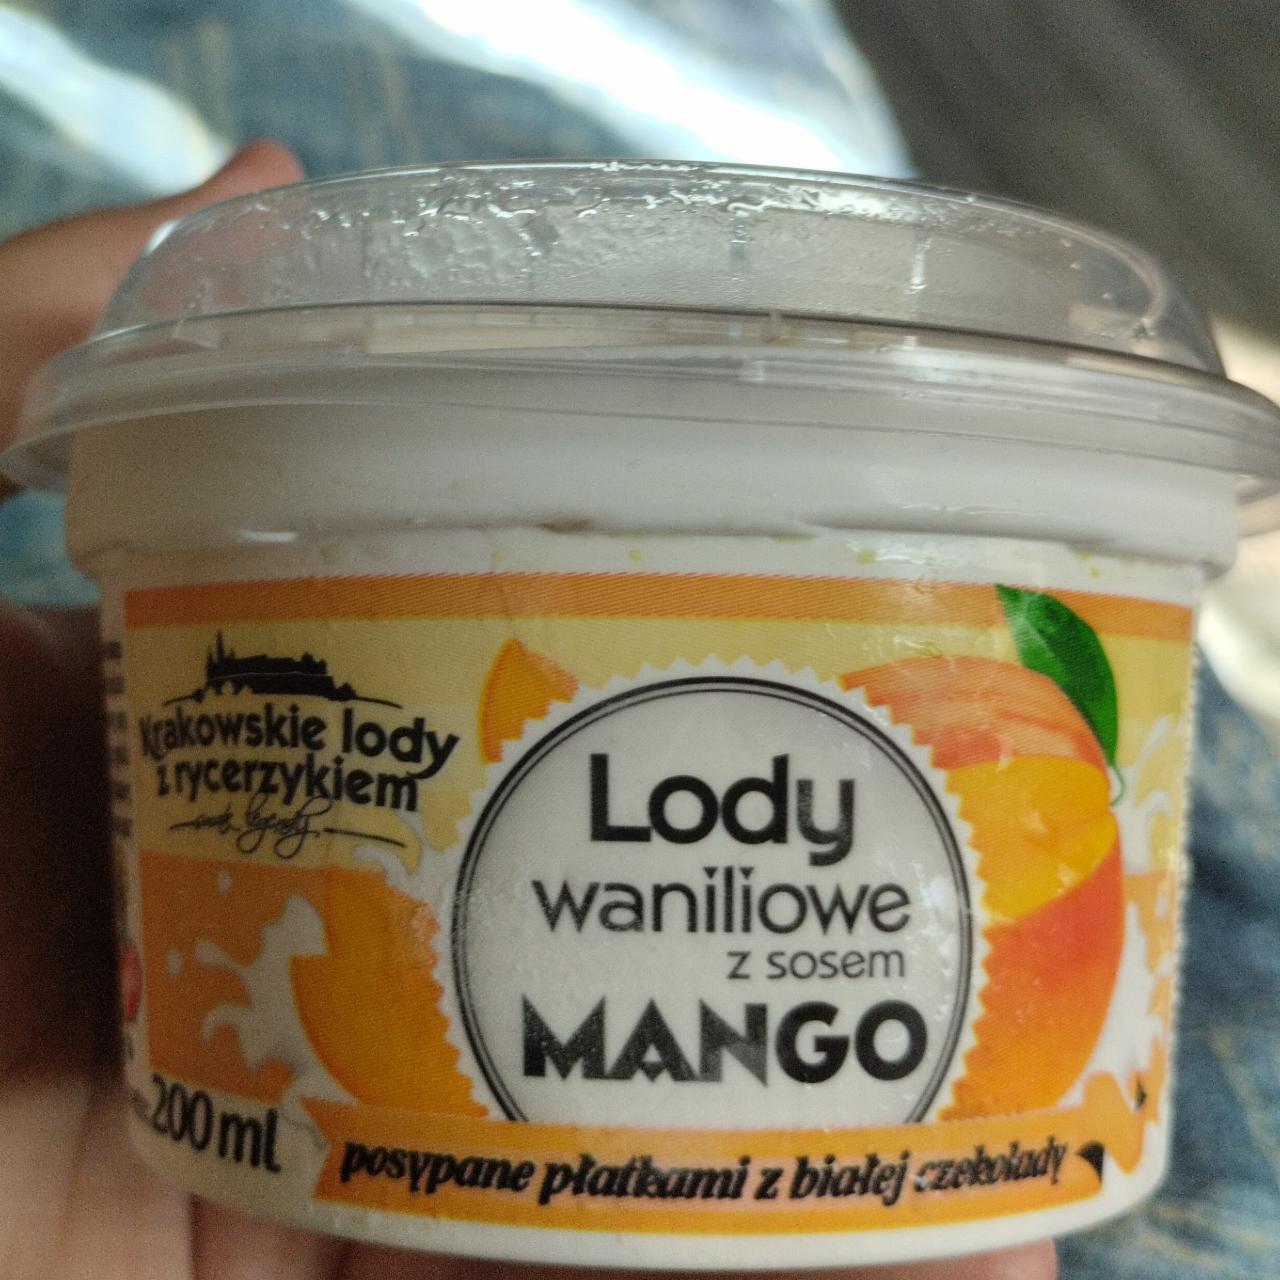 Фото - молочный продукт lody ванильный с соусом манго Krakowskie Lody Z Rycerzykiem